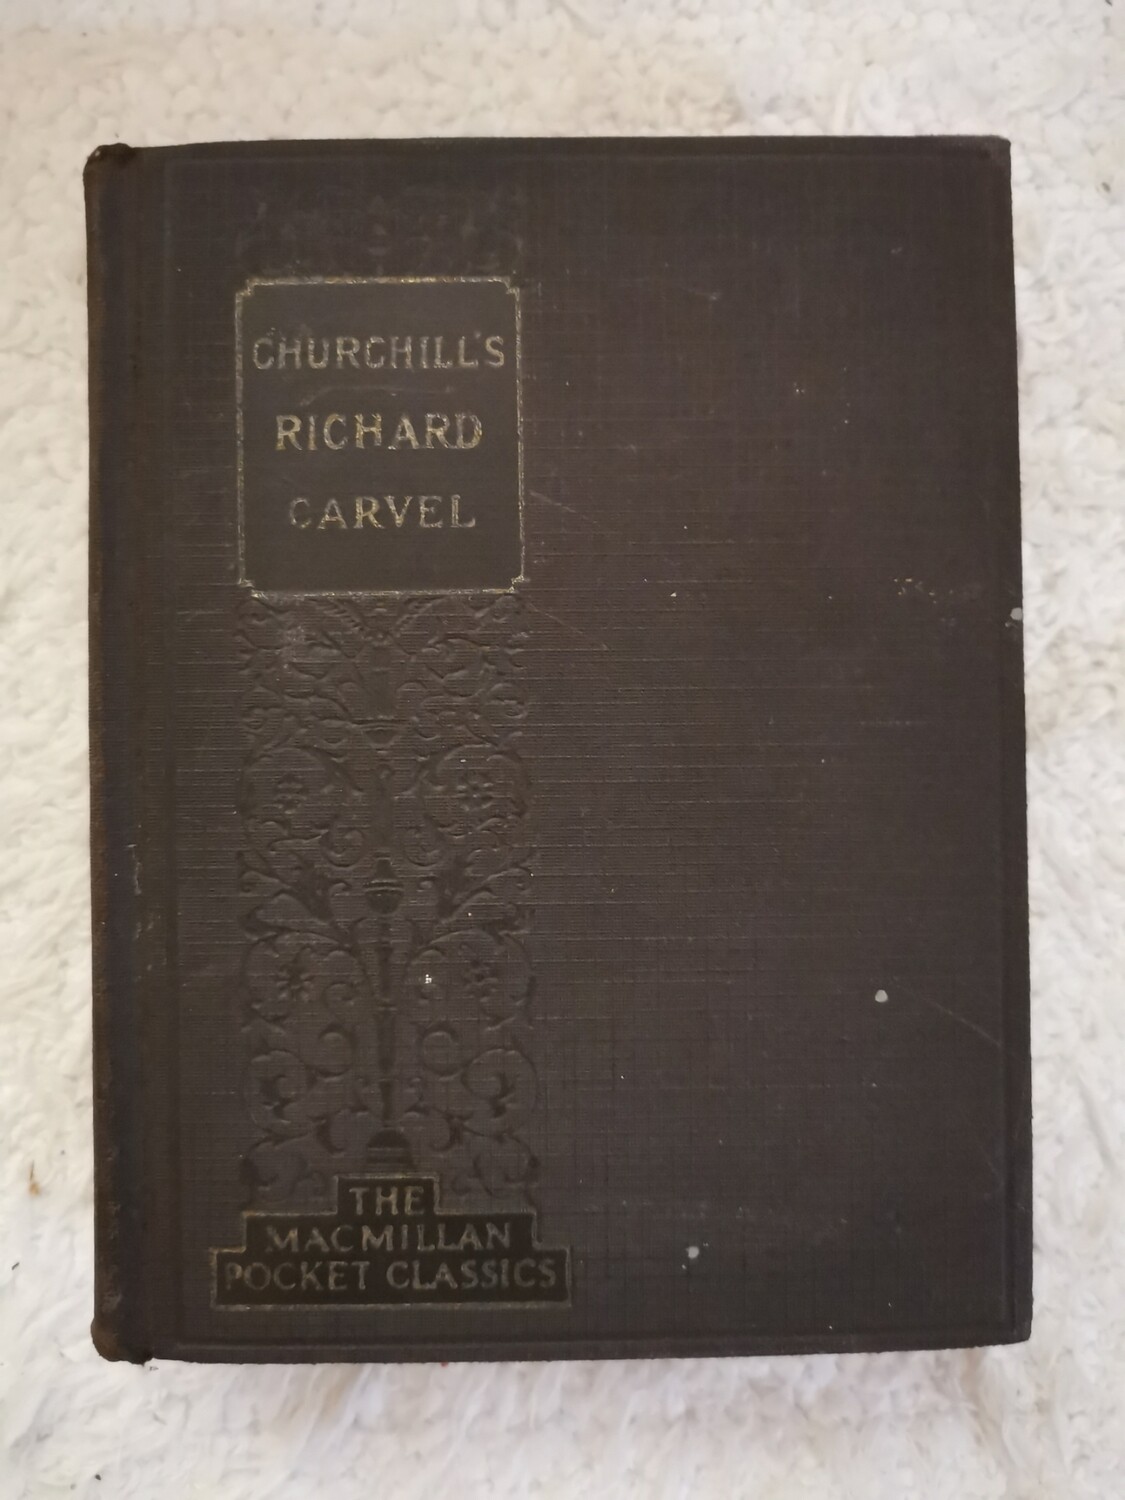 Churchill's Richard Carvel